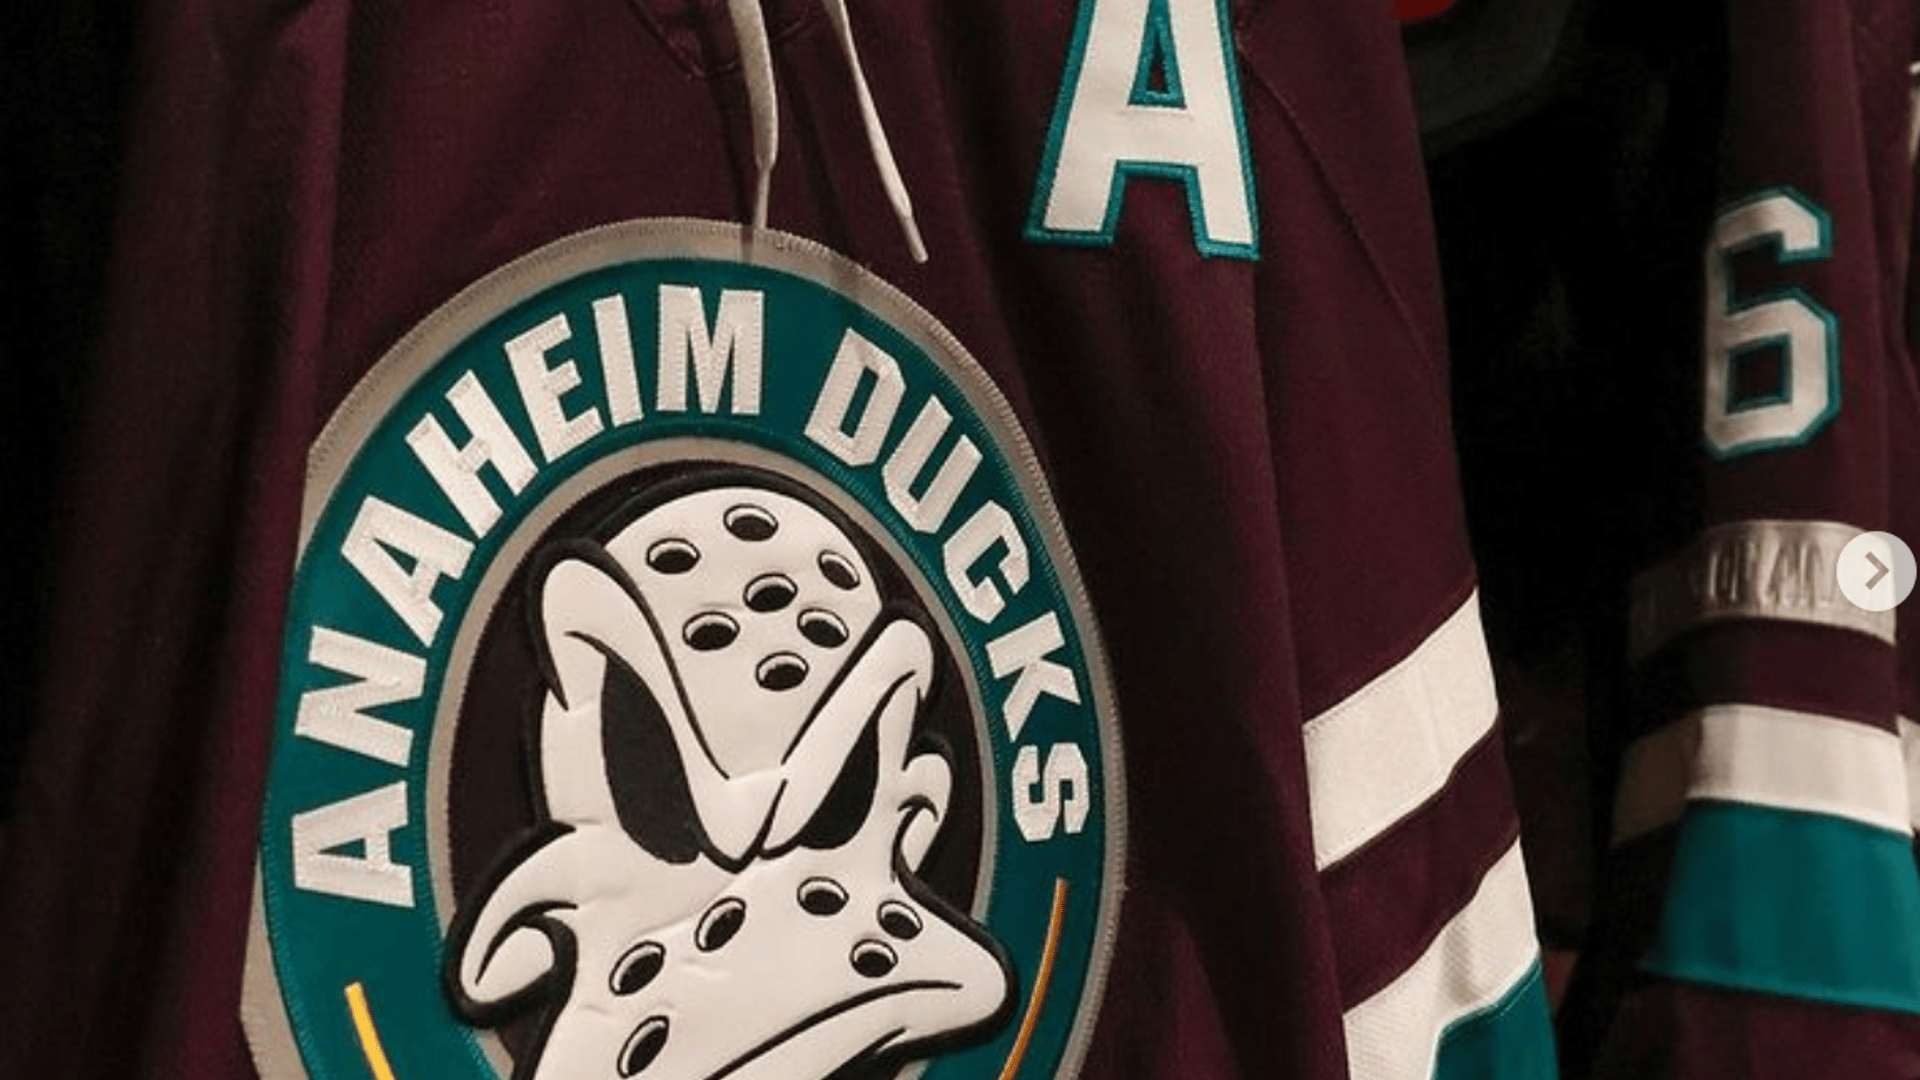 The Anaheim Ducks - Ice Hockey